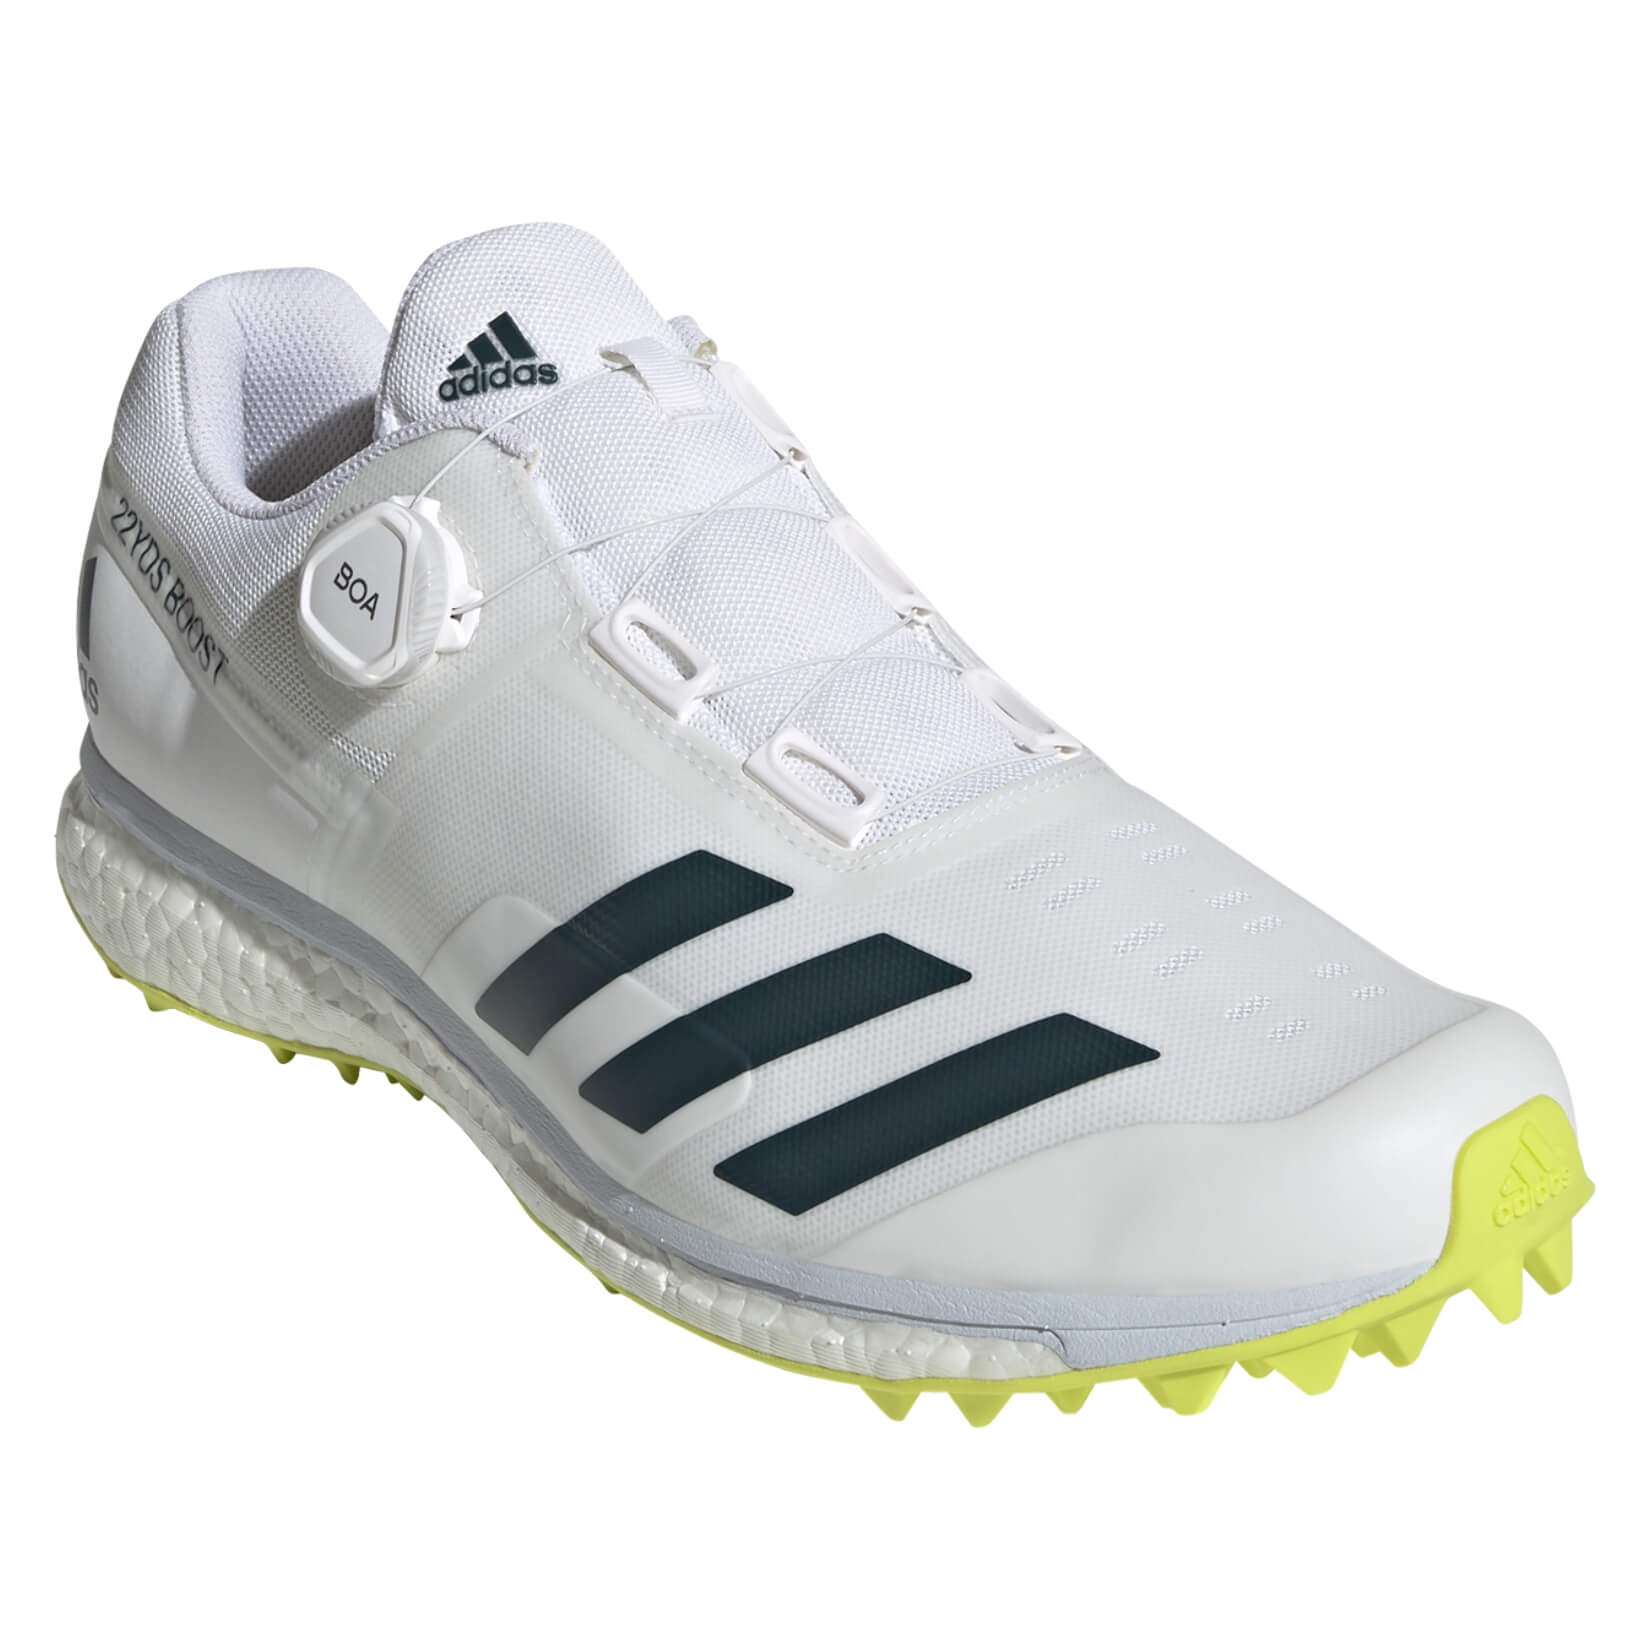 adidas Adizero Boost SL22 Cricket Shoes